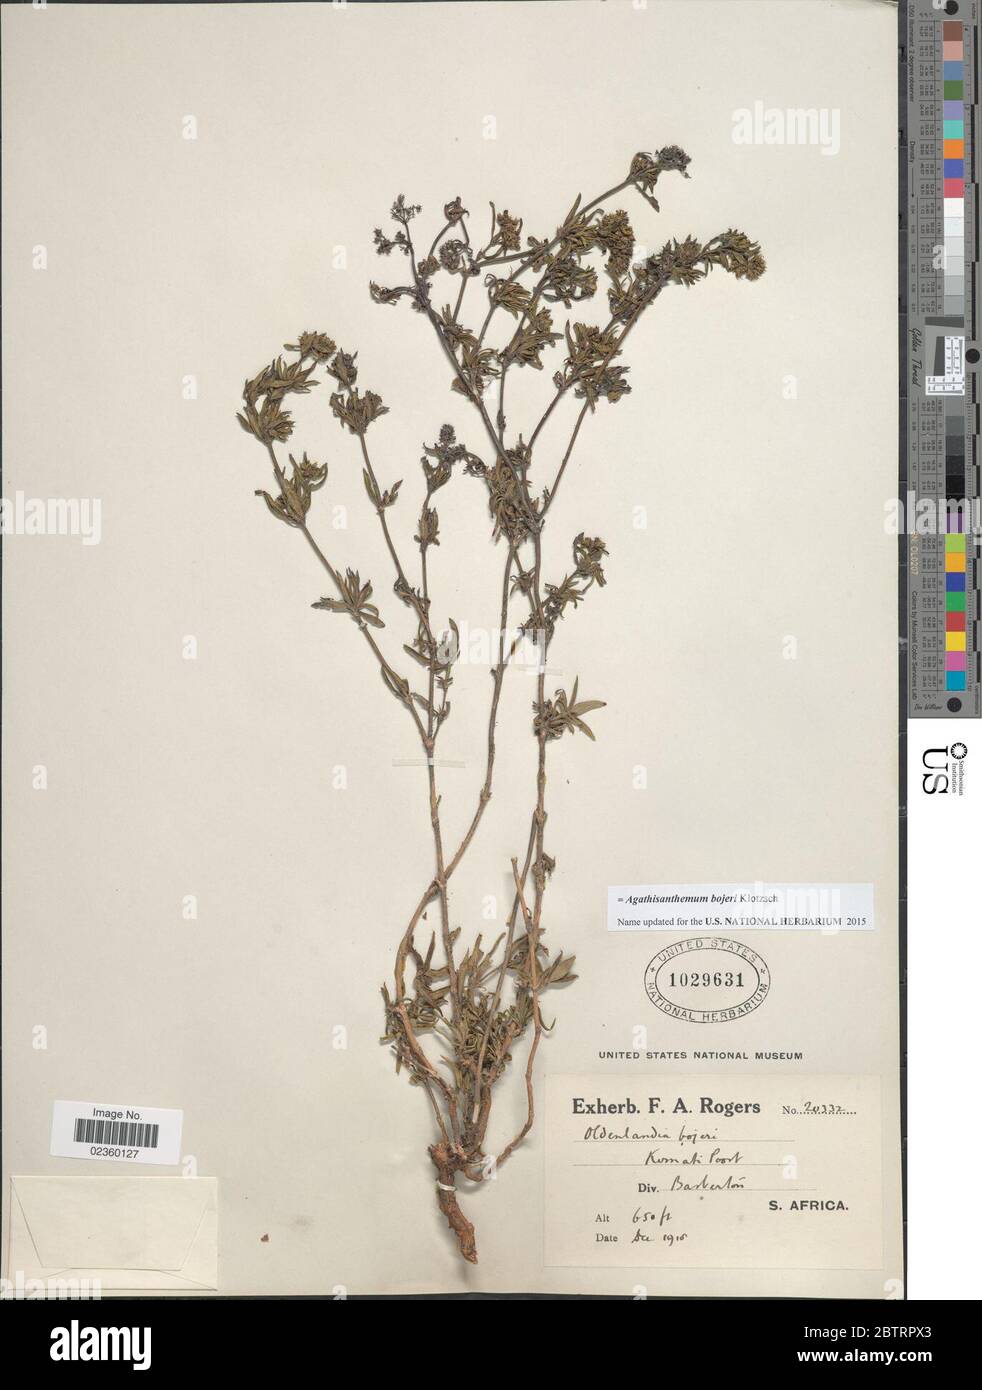 Agathisanthemum bojeri Klotzsch. Stock Photo